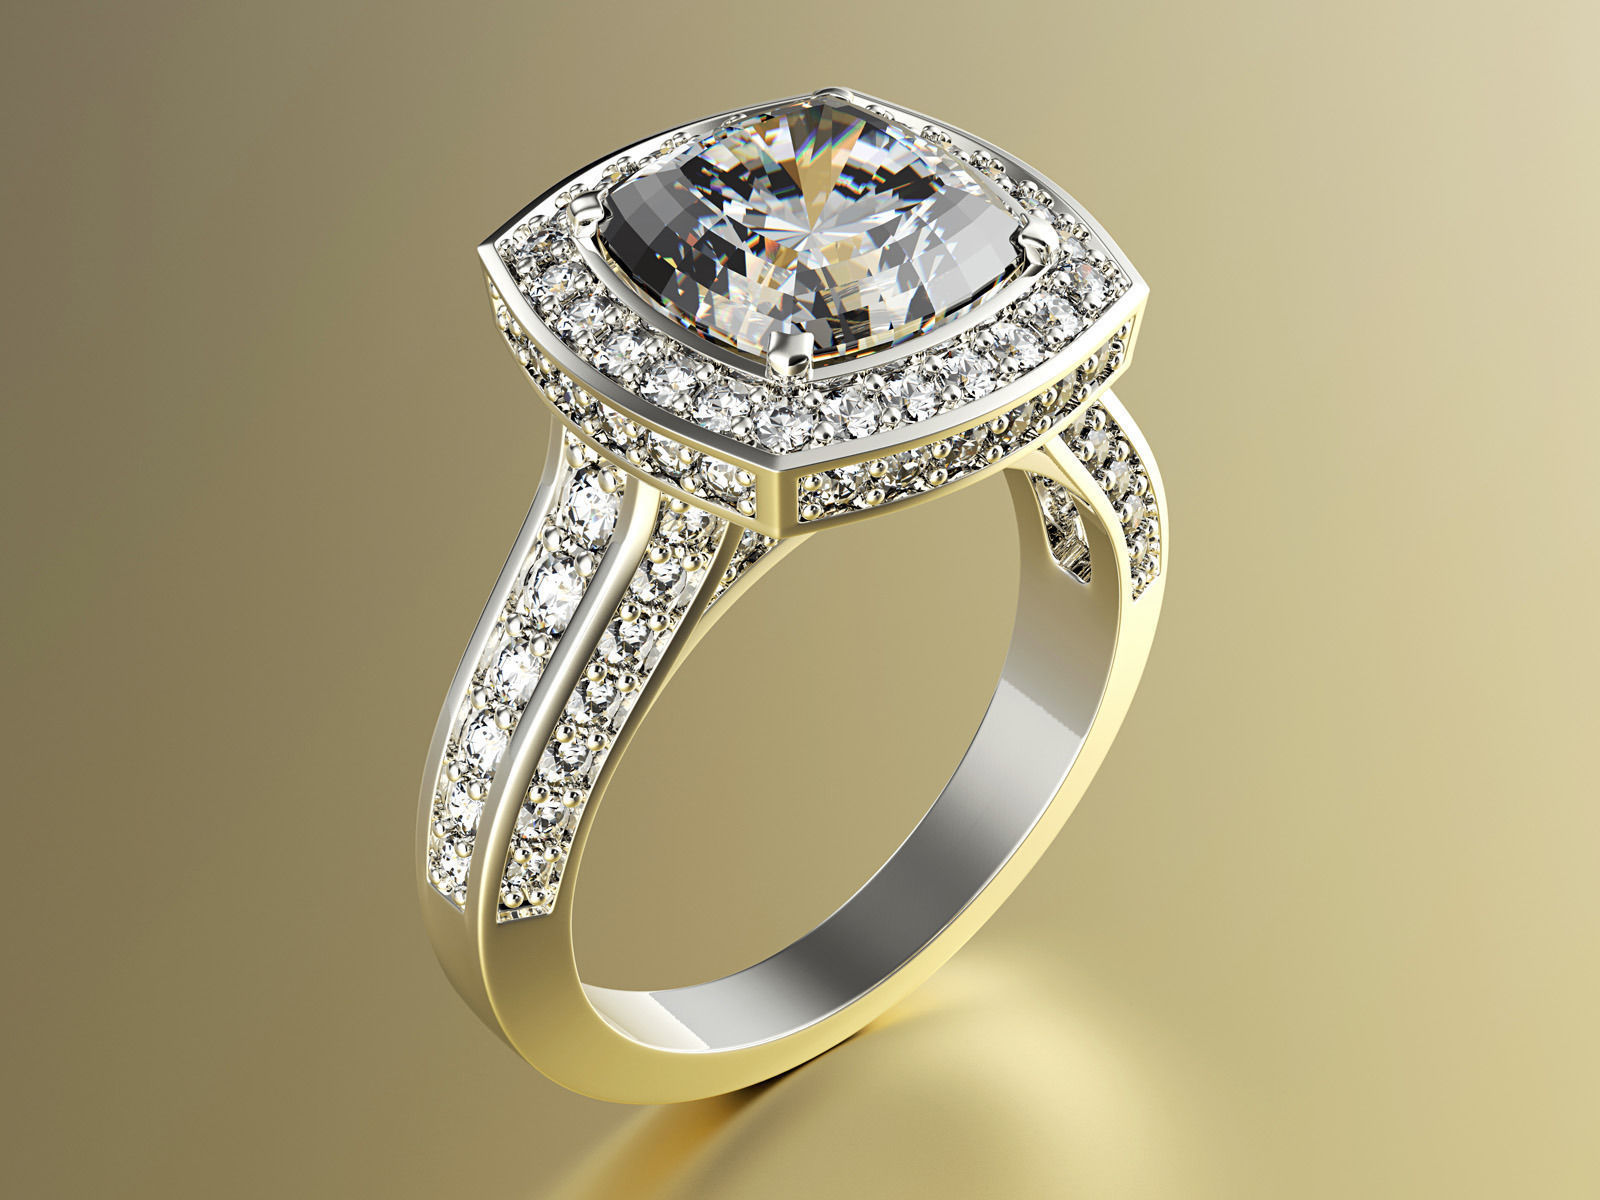 engagement-ring-3d-model-3d-download-for-free-vfxviet-com